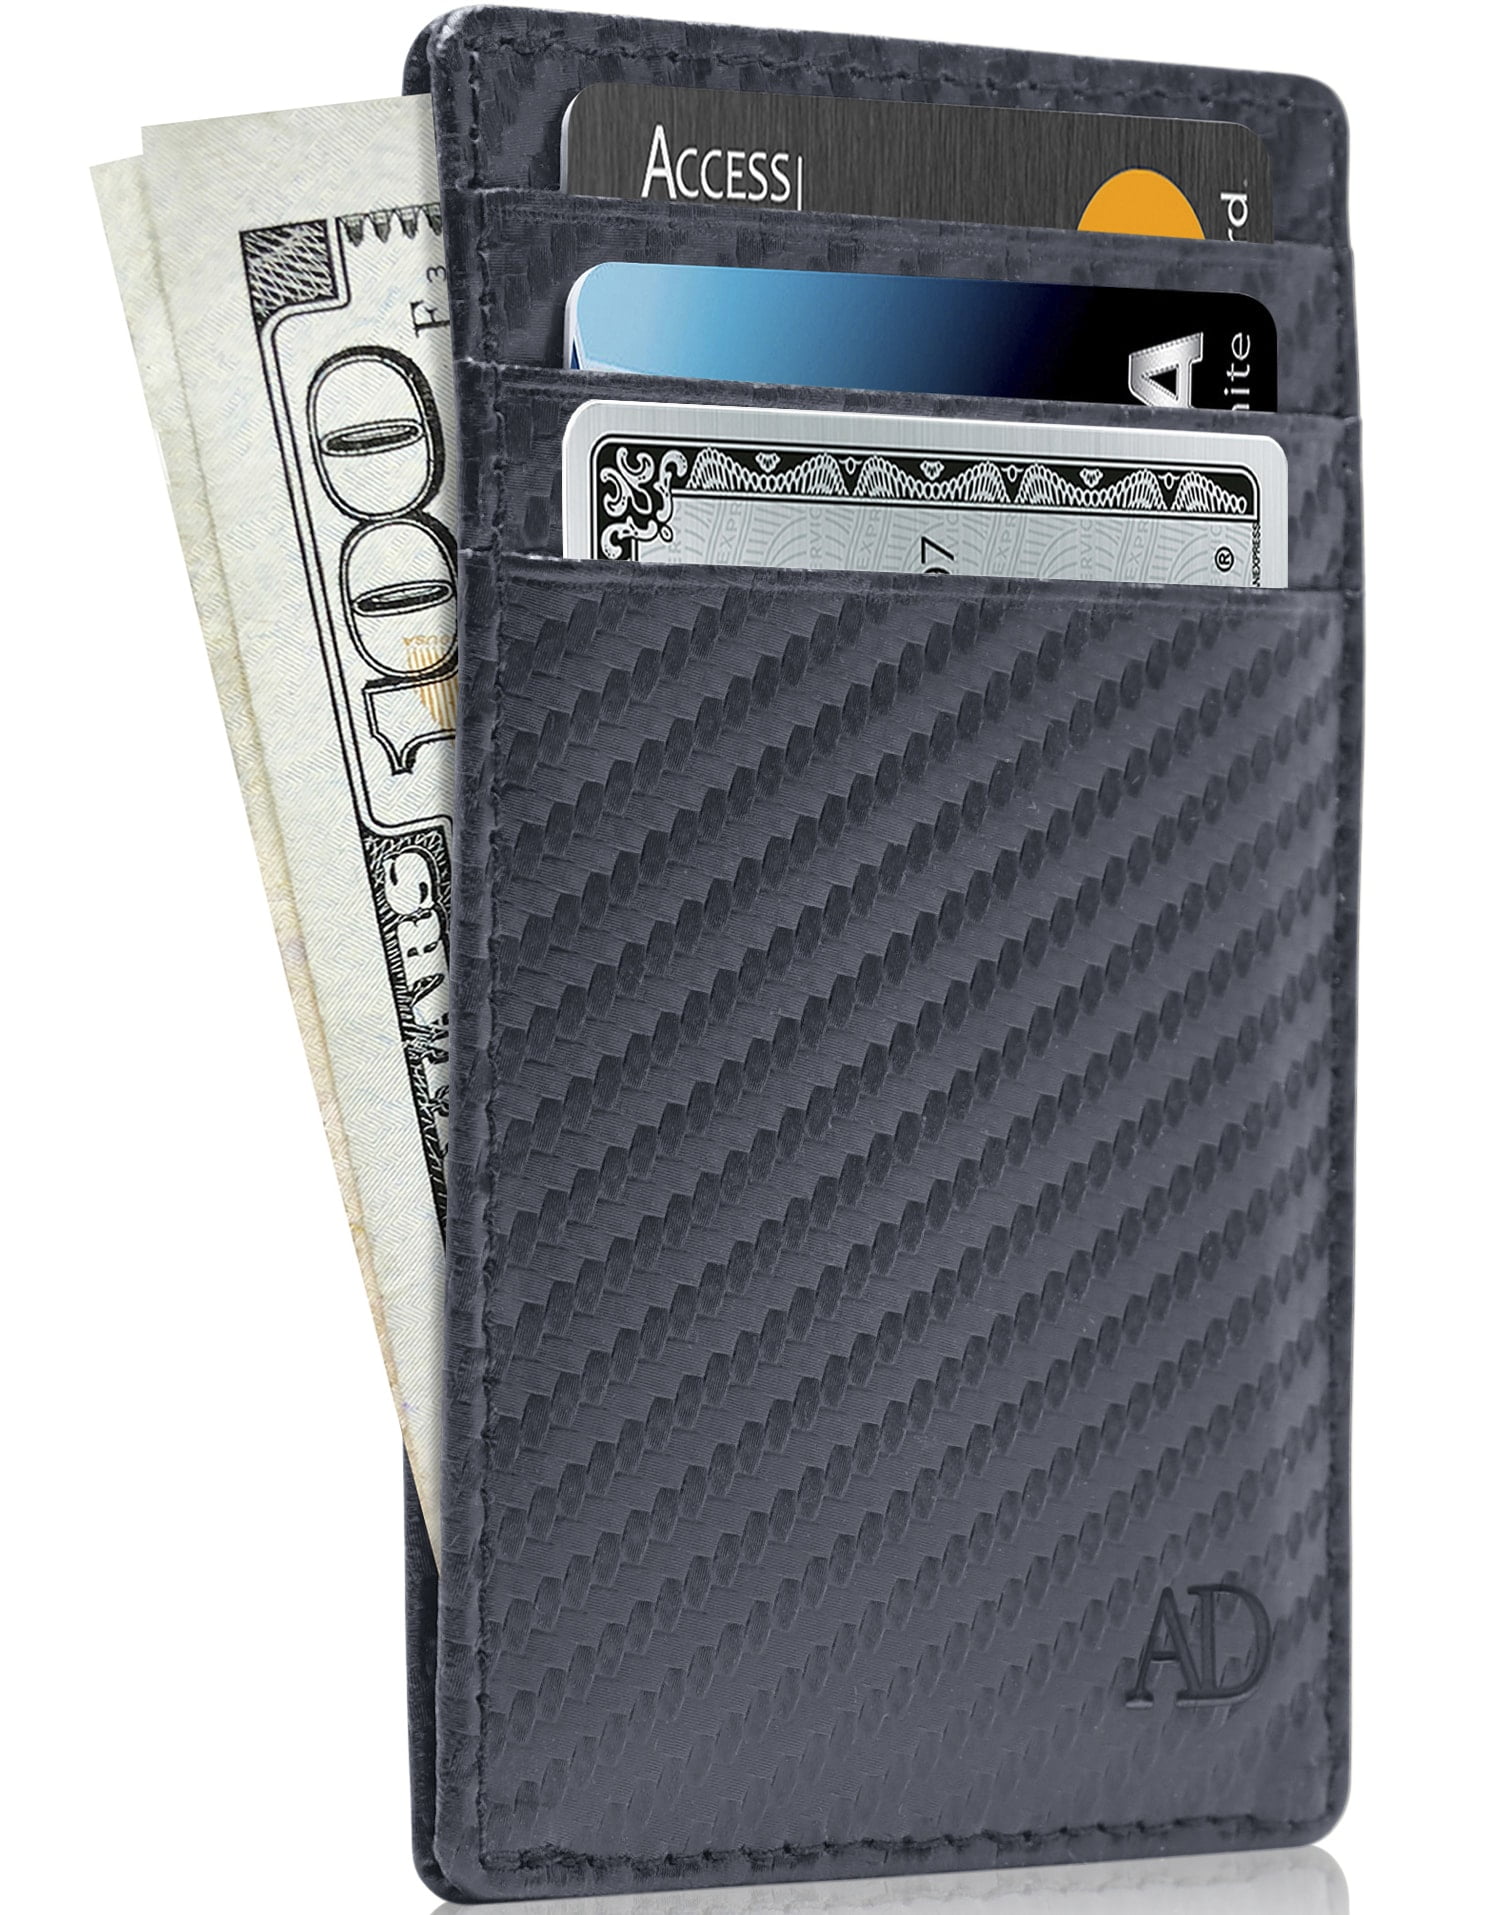 Genuine Leather Wallet MOSIYEEF Slim Wallets for Men RFID Blocking Minimalist Wallet Money Clip Card Holder For 8 Cards gray 